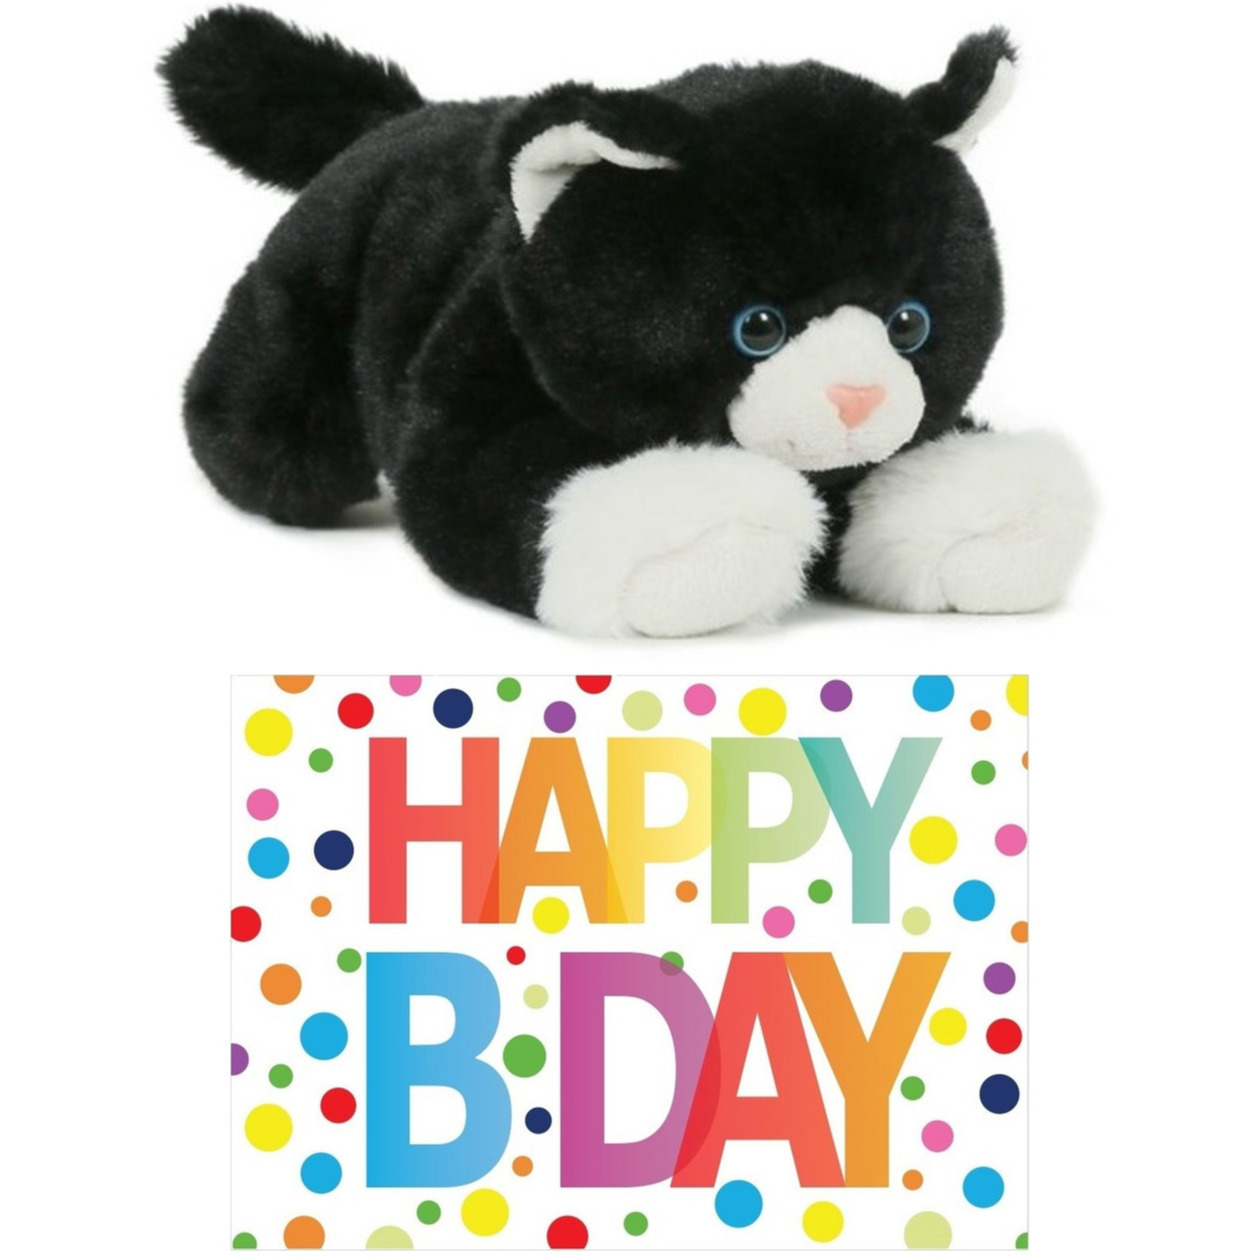 Cadeau setje pluche zwart-witte kat-poes knuffel 25 cm met Happy Birthday wenskaart